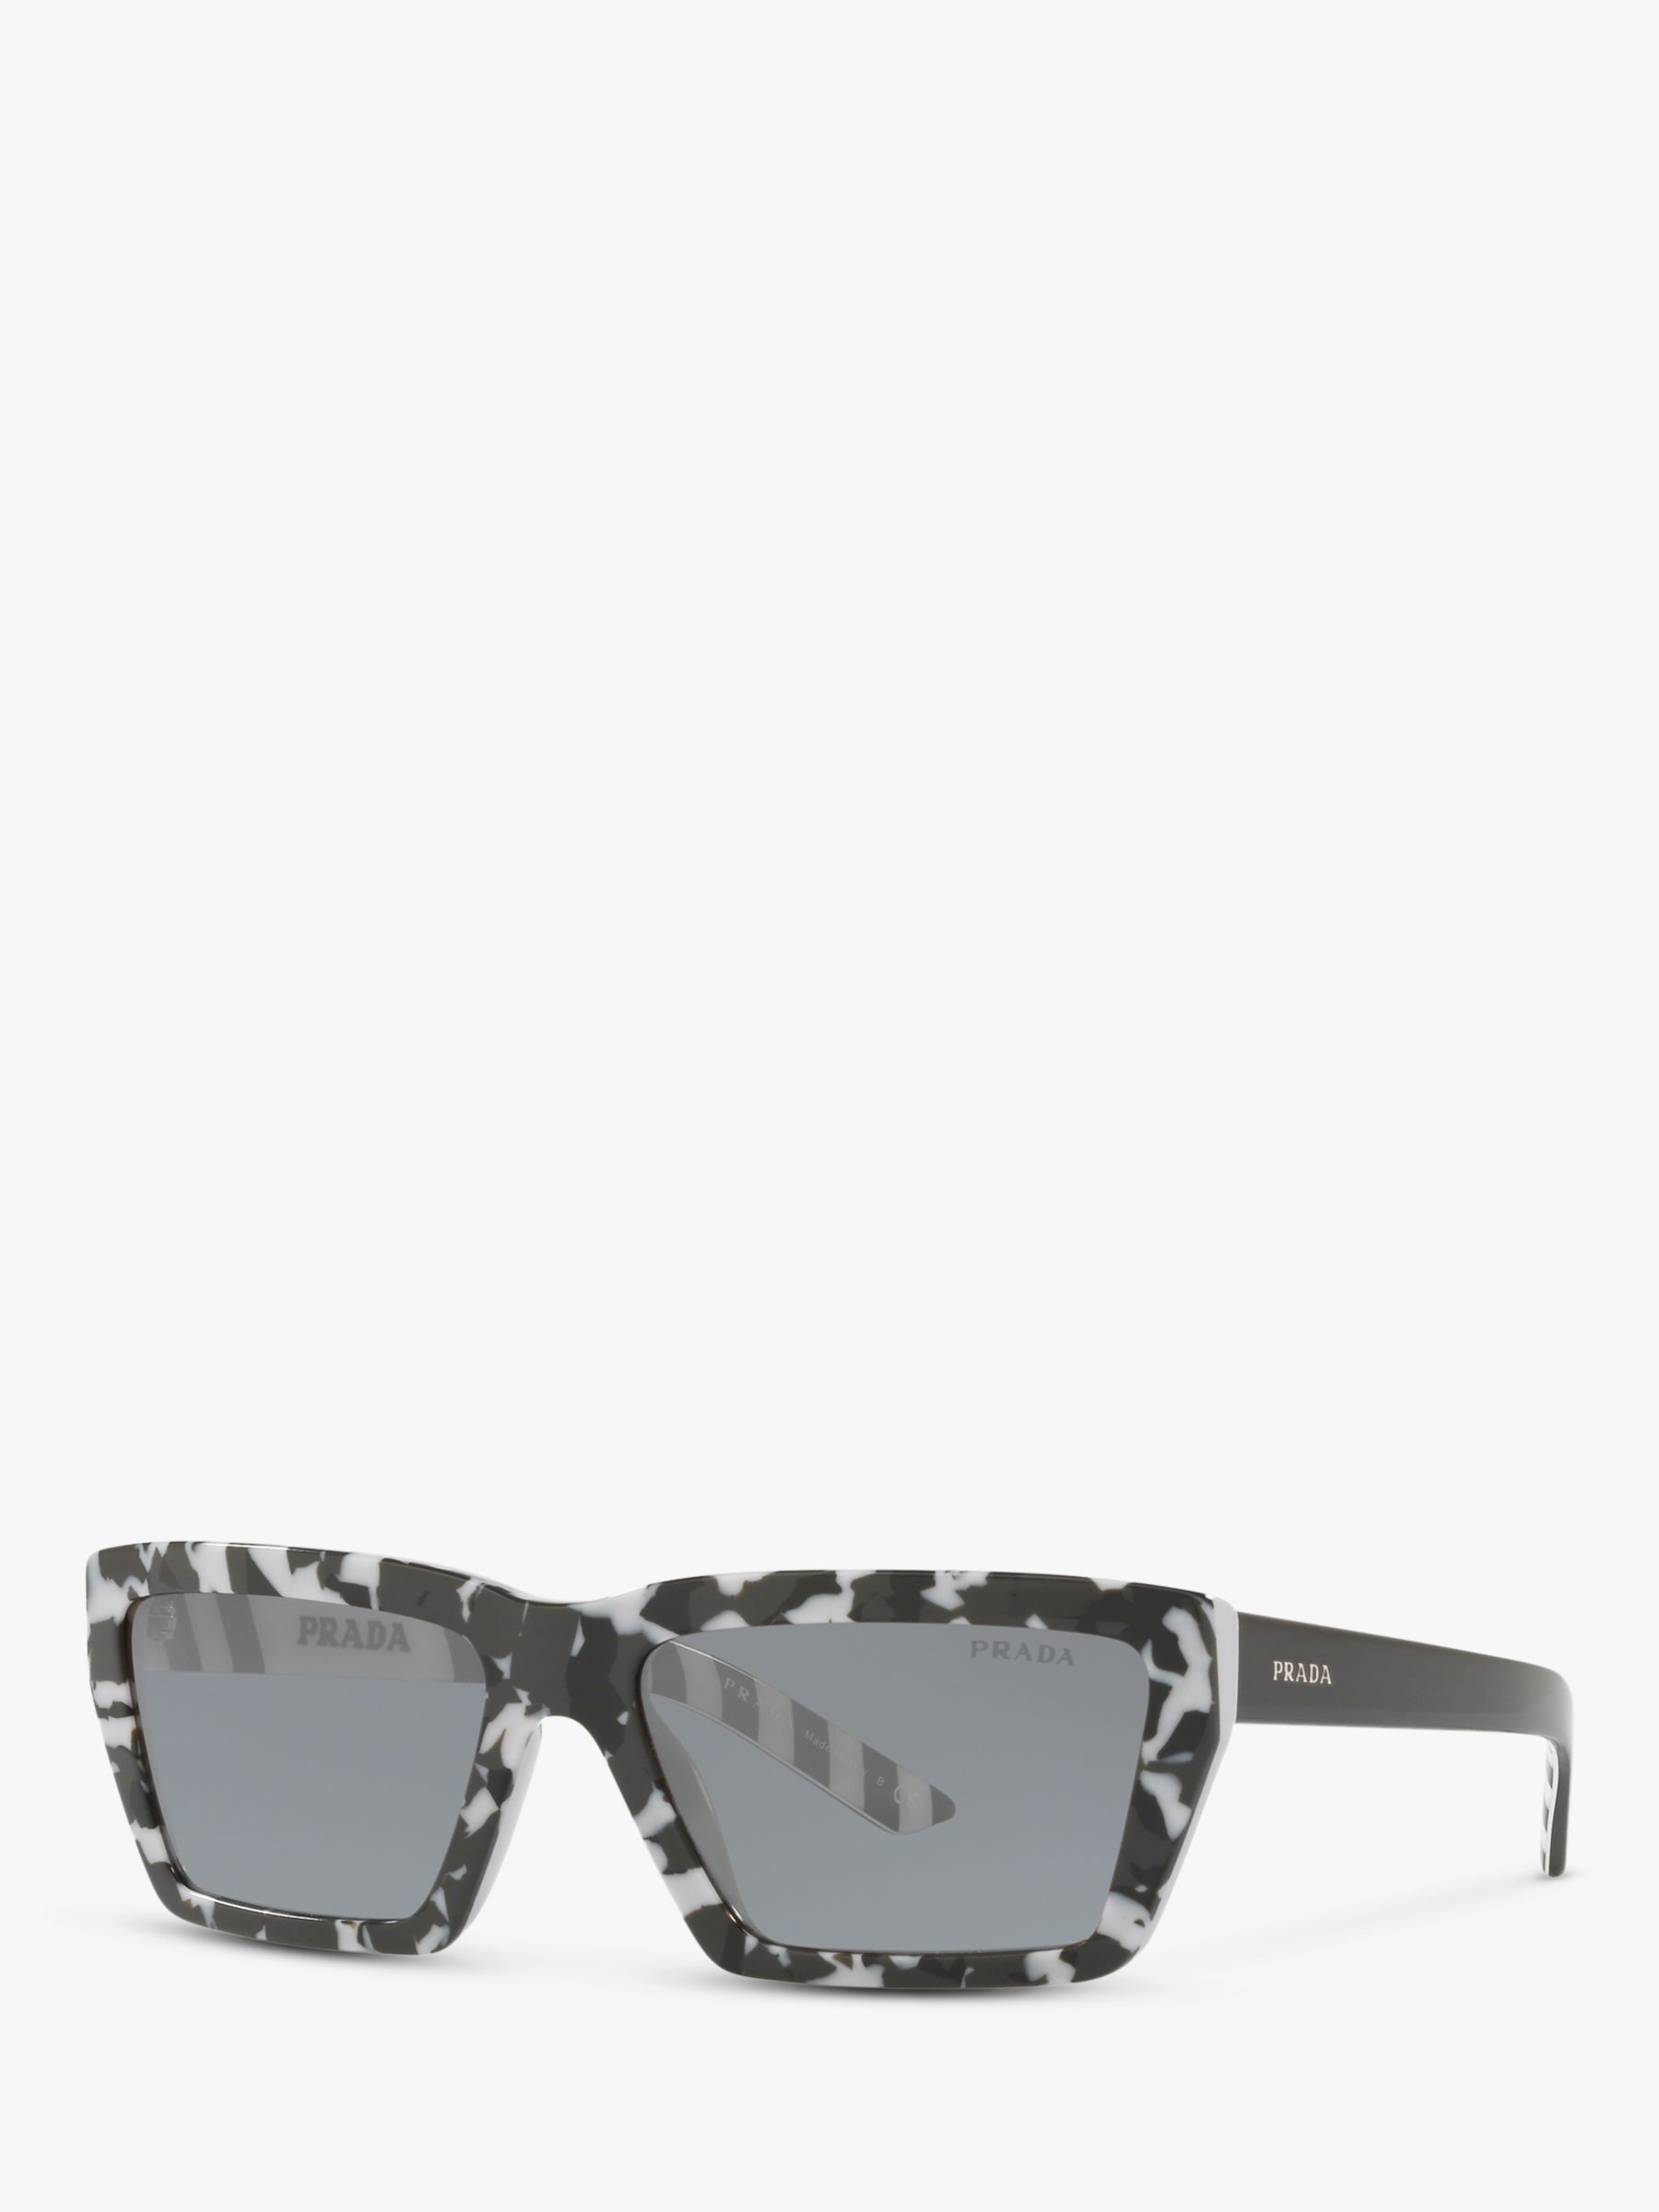 Prada PR 04VS Women's Rectangular Sunglasses, Camouflage Black/Grey at John Lewis & Partners